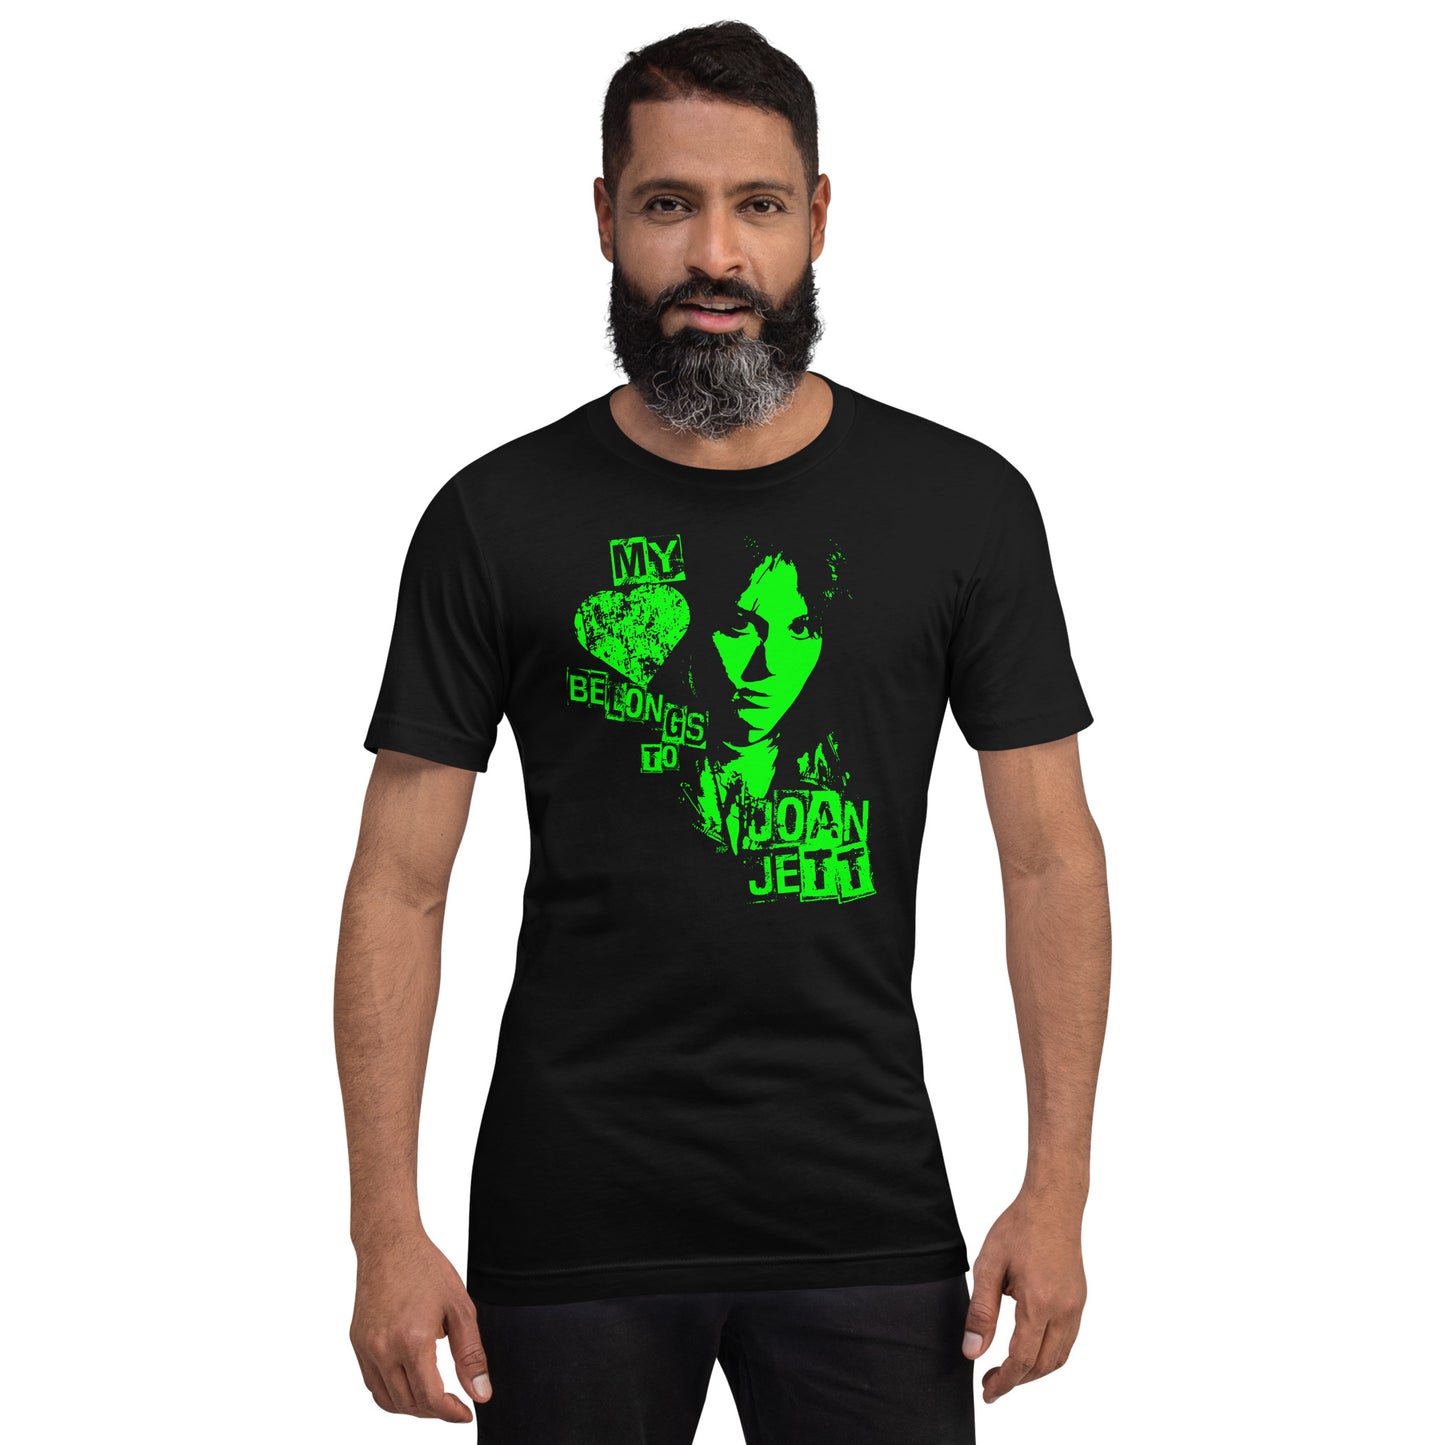 Joan Jett Green T-shirt